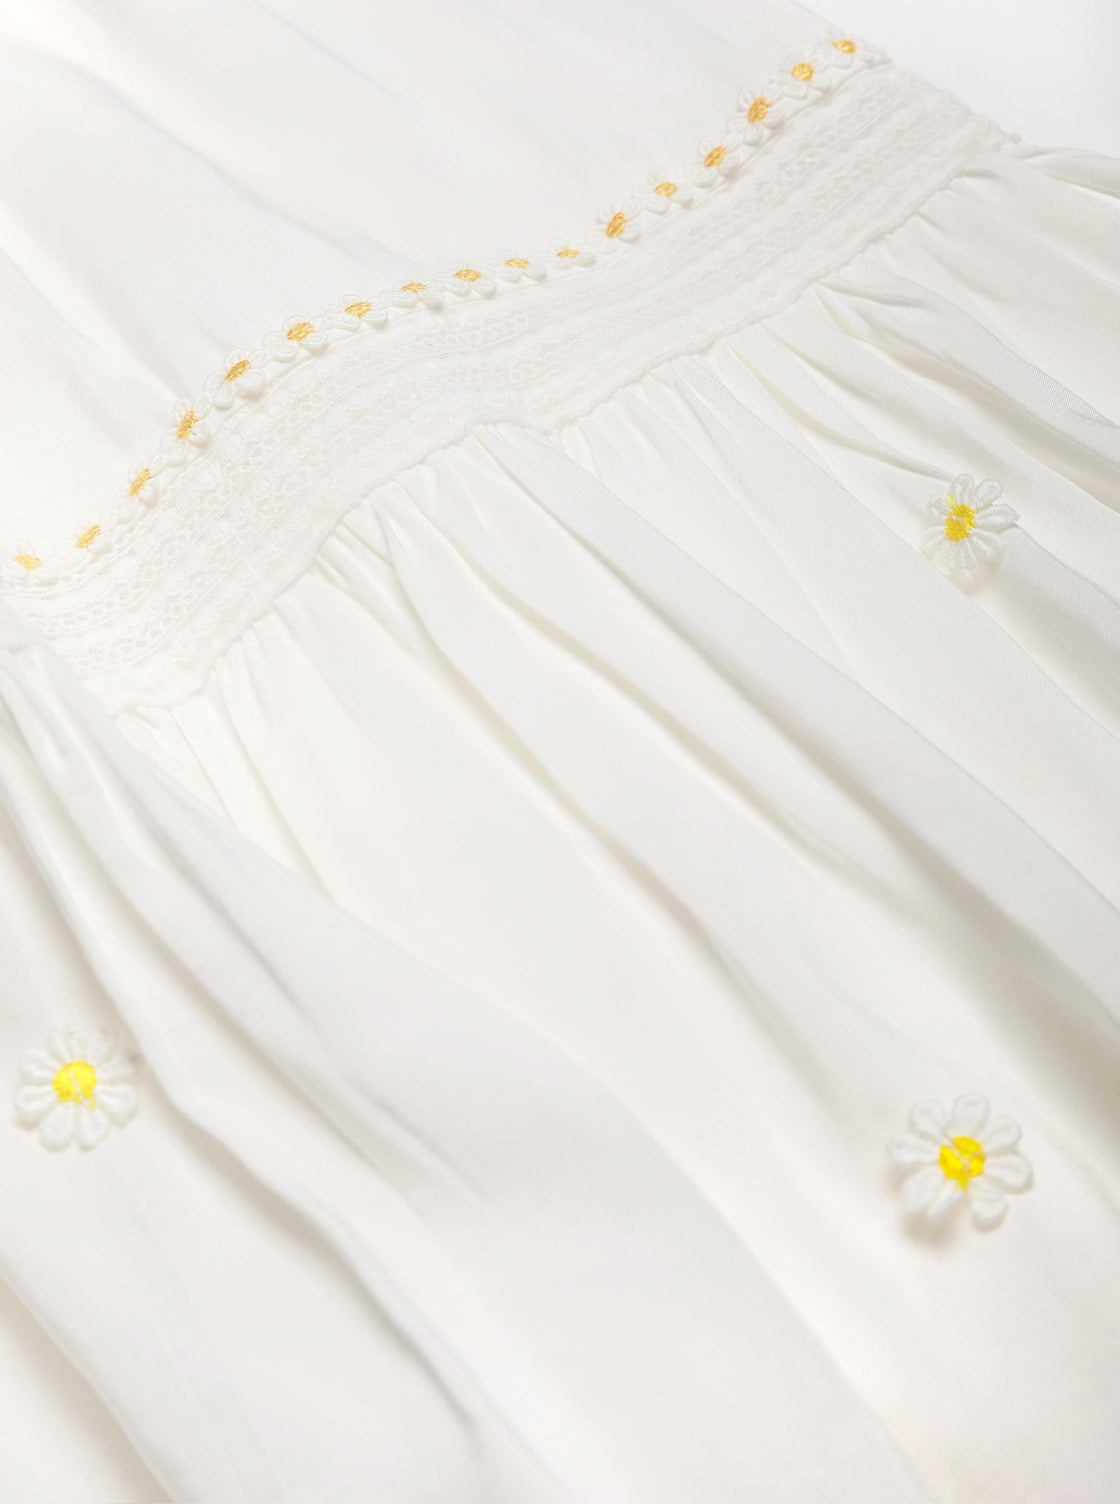 Dreamy Daisy Tiered Skirt